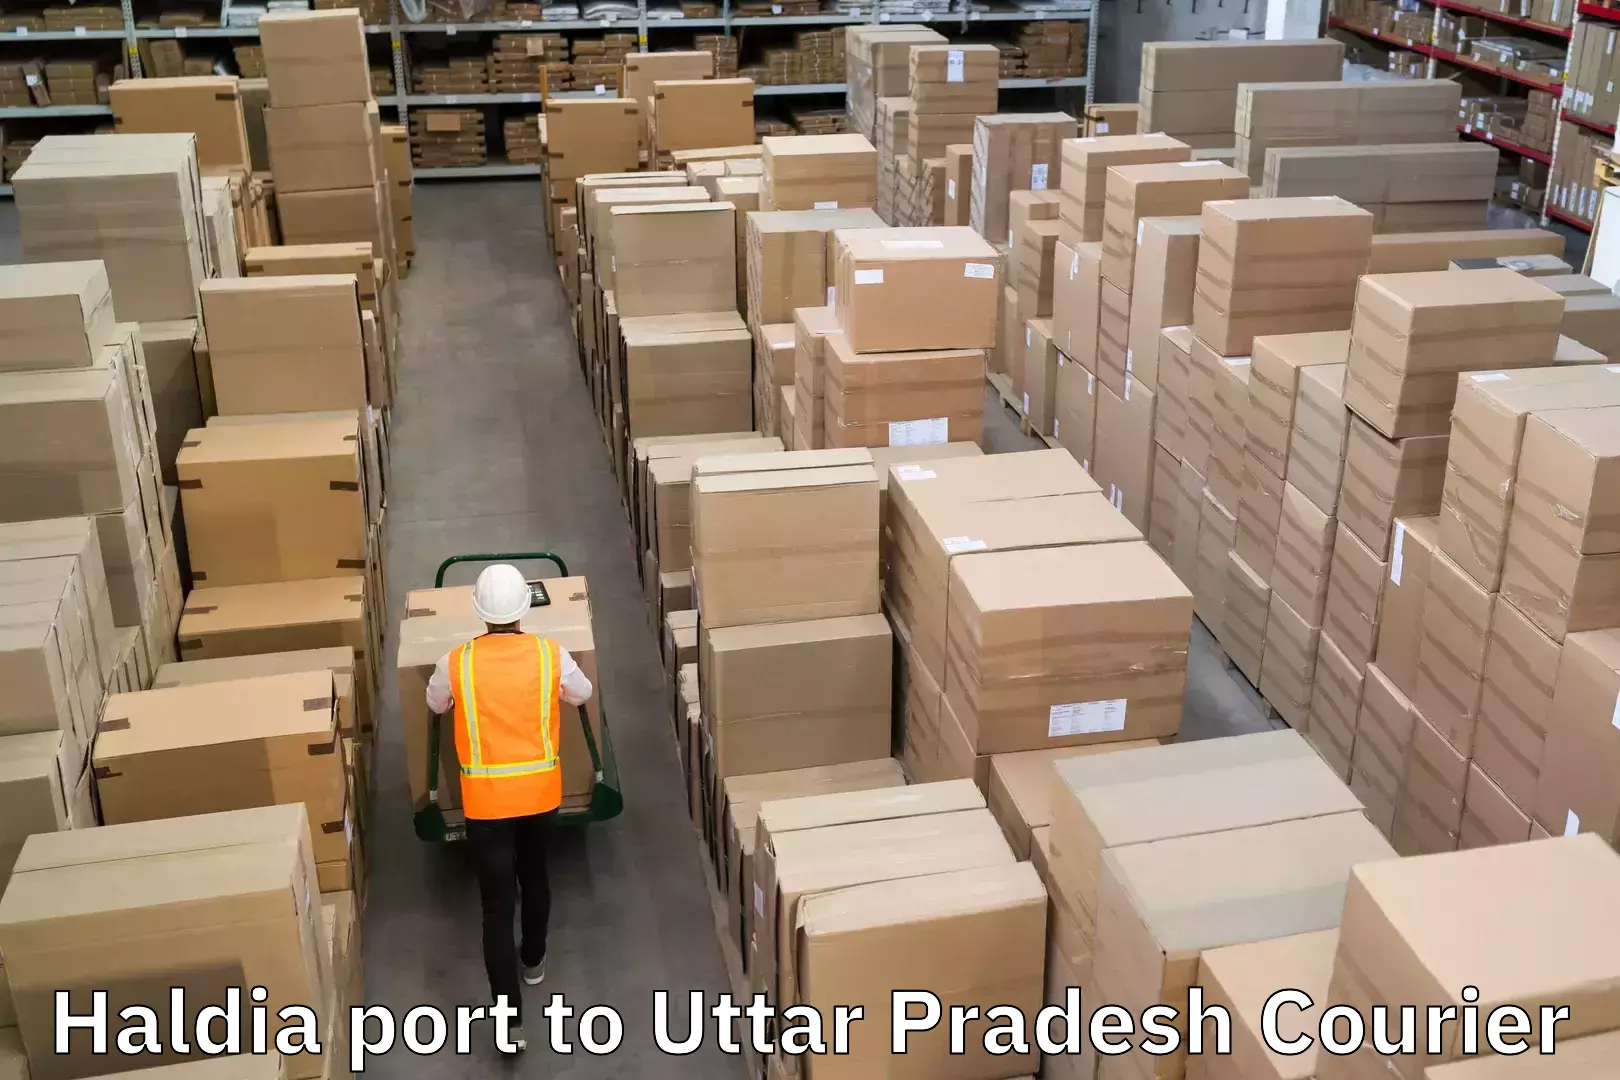 Efficient freight service Haldia port to Uttar Pradesh